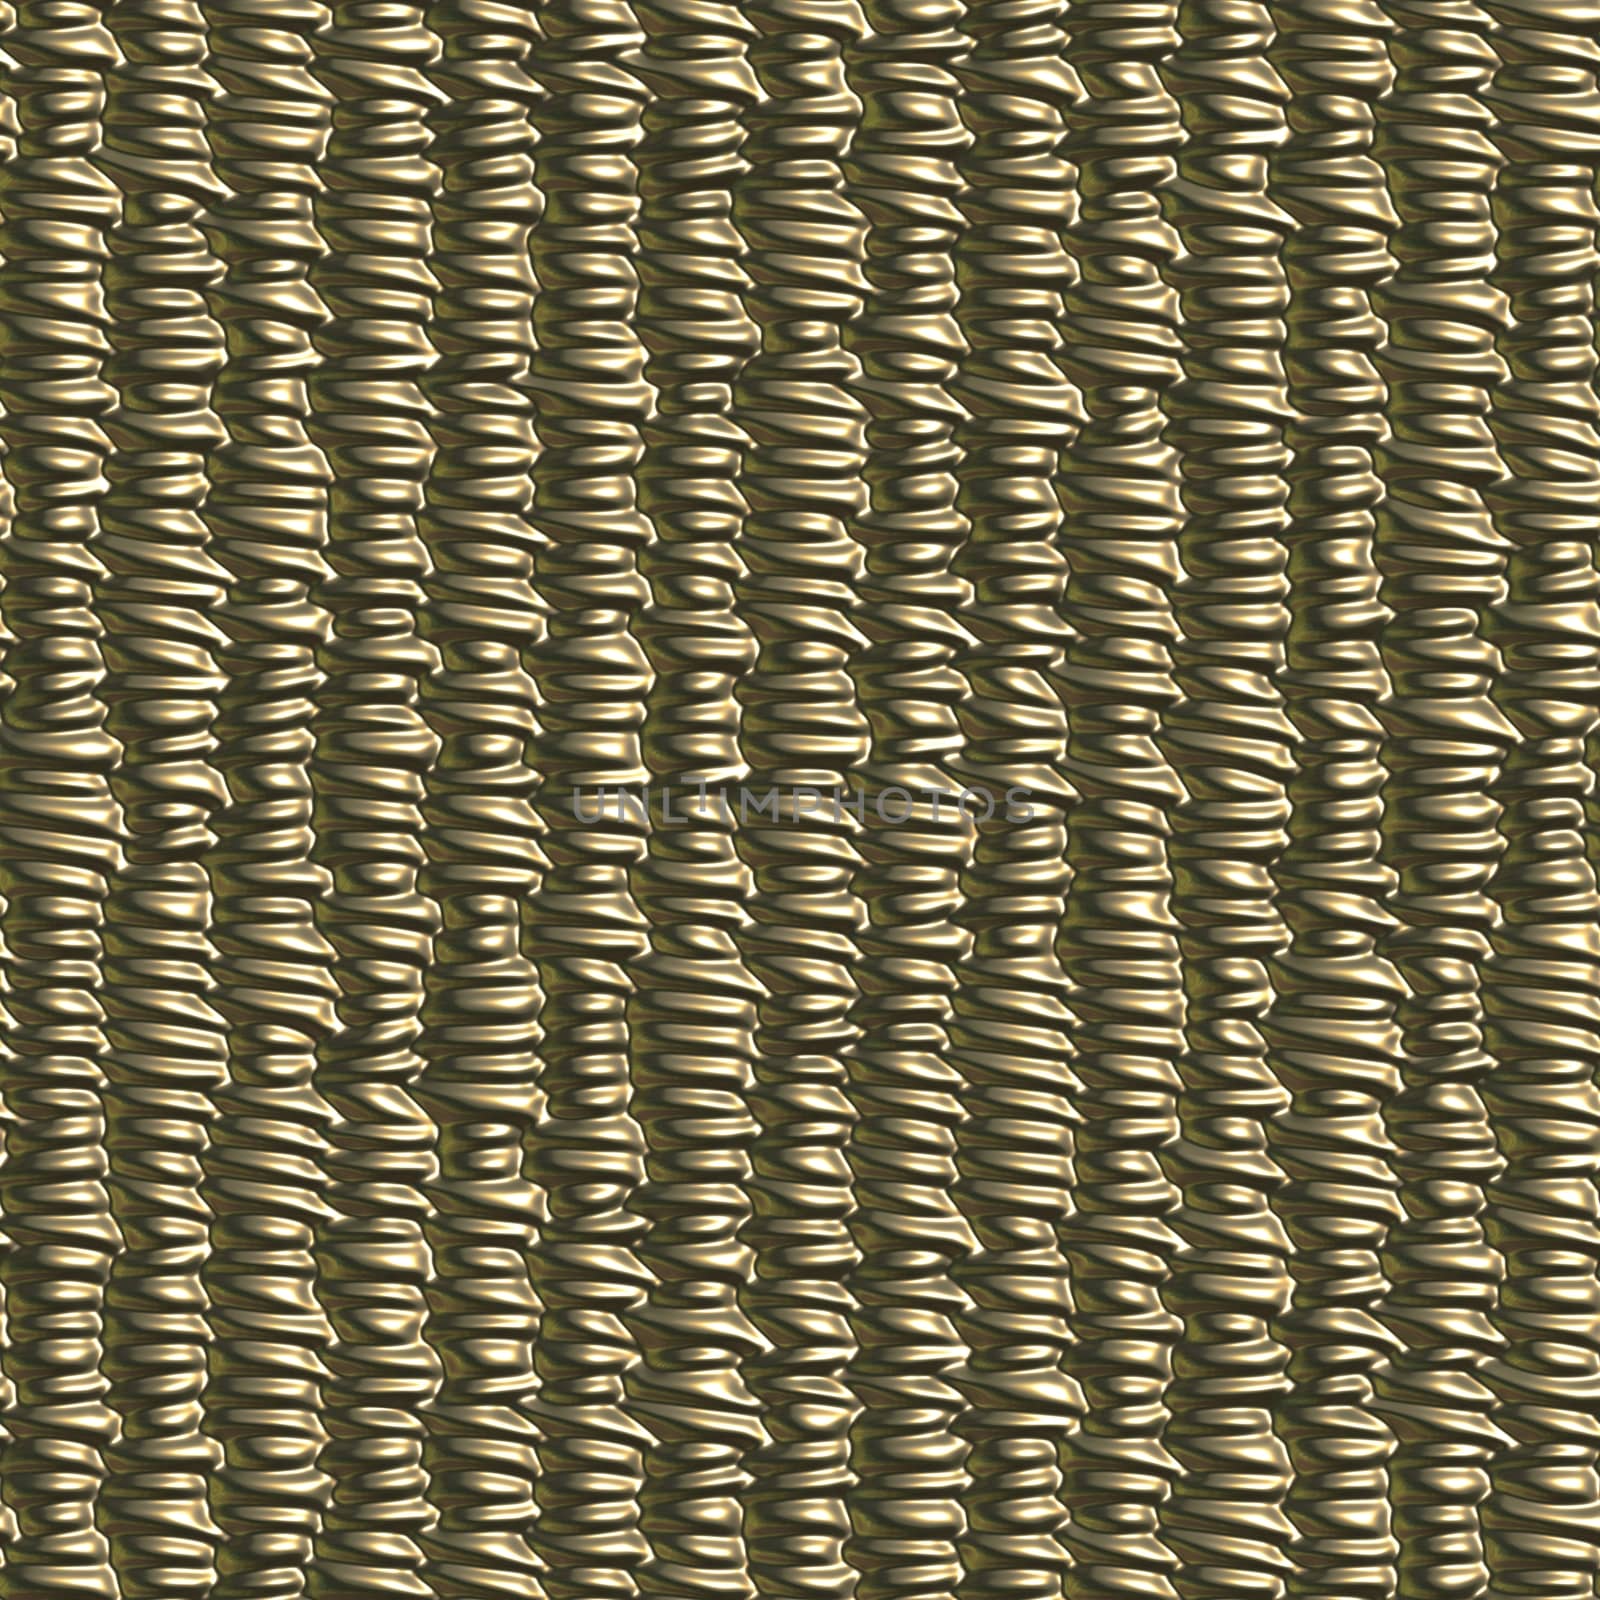 Gravel tile effect seamless background pattern.